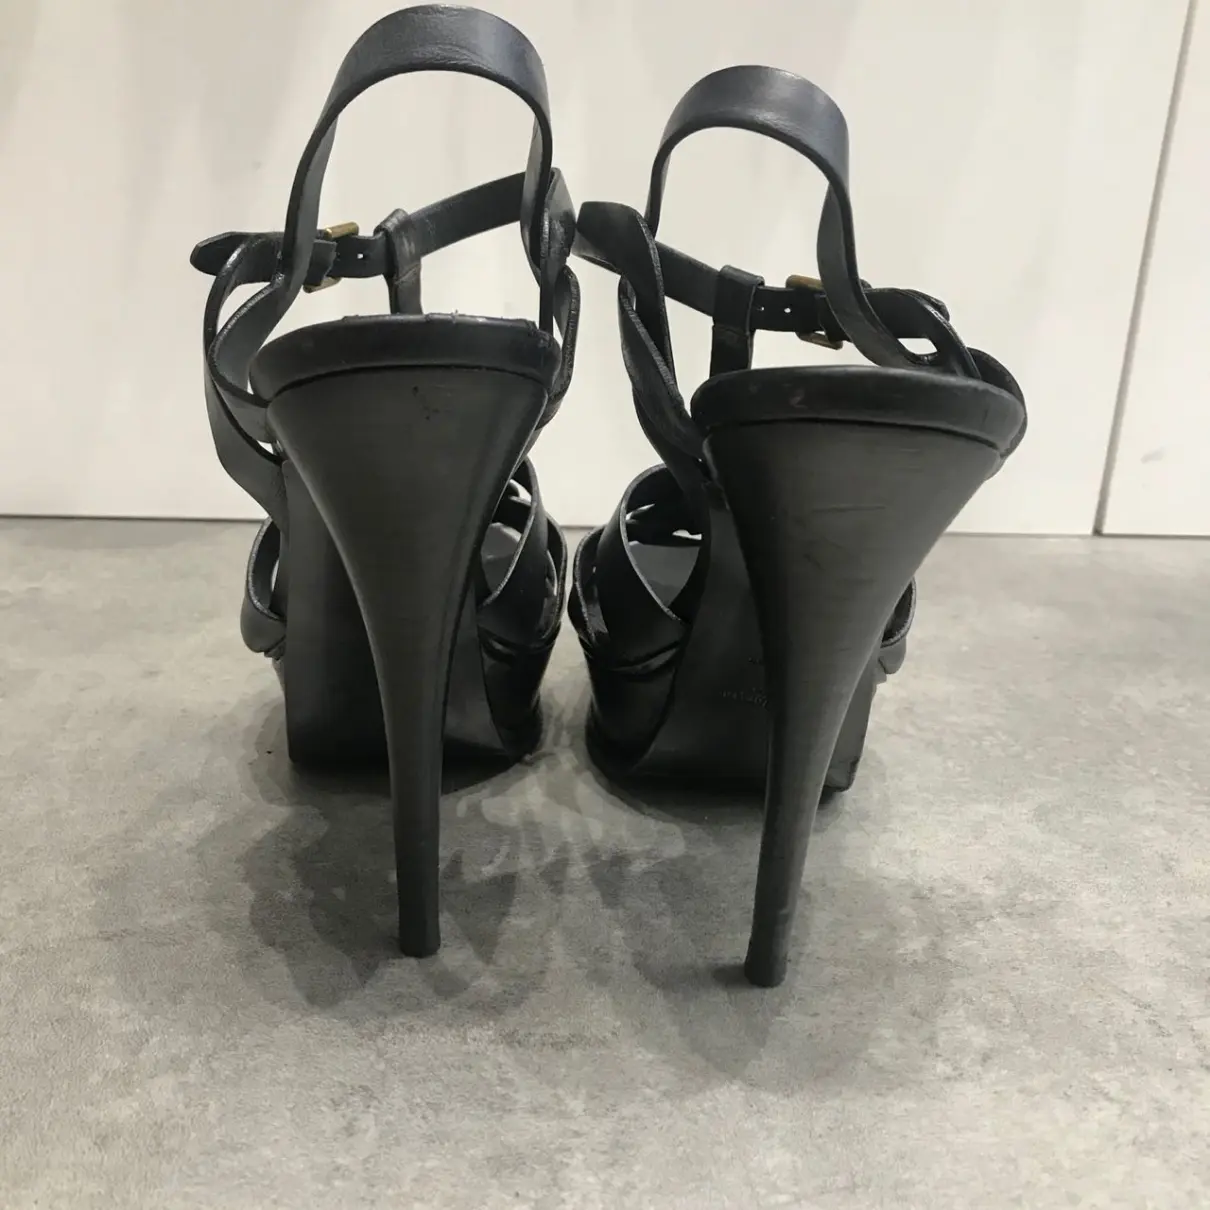 Luxury Saint Laurent Sandals Women